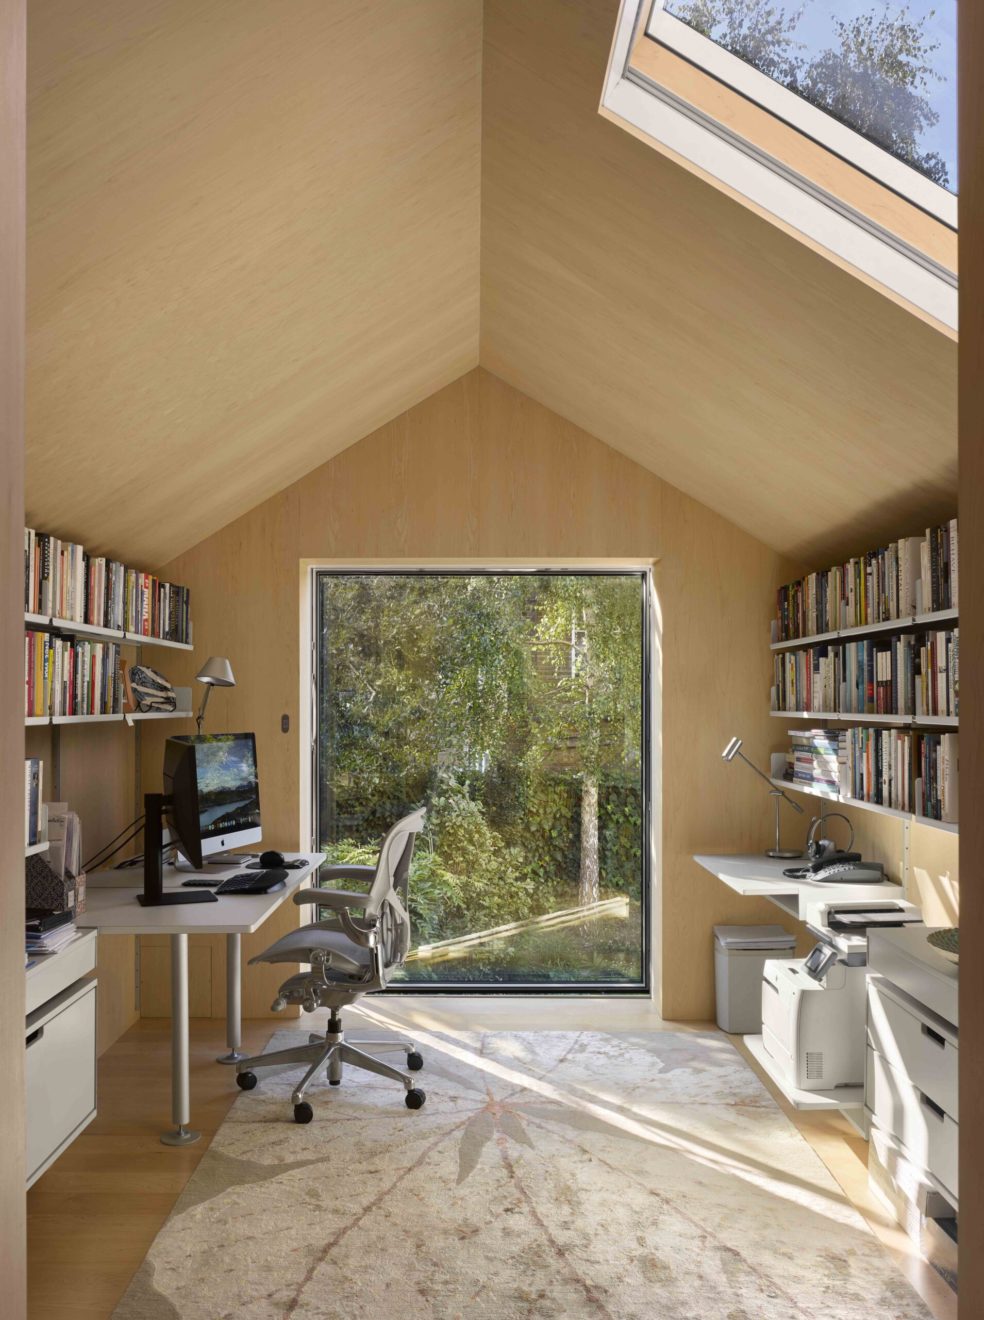 A modernist home - Will Pryce - Suzy Hoodless - Interior designer - Aucoot Estate Agents